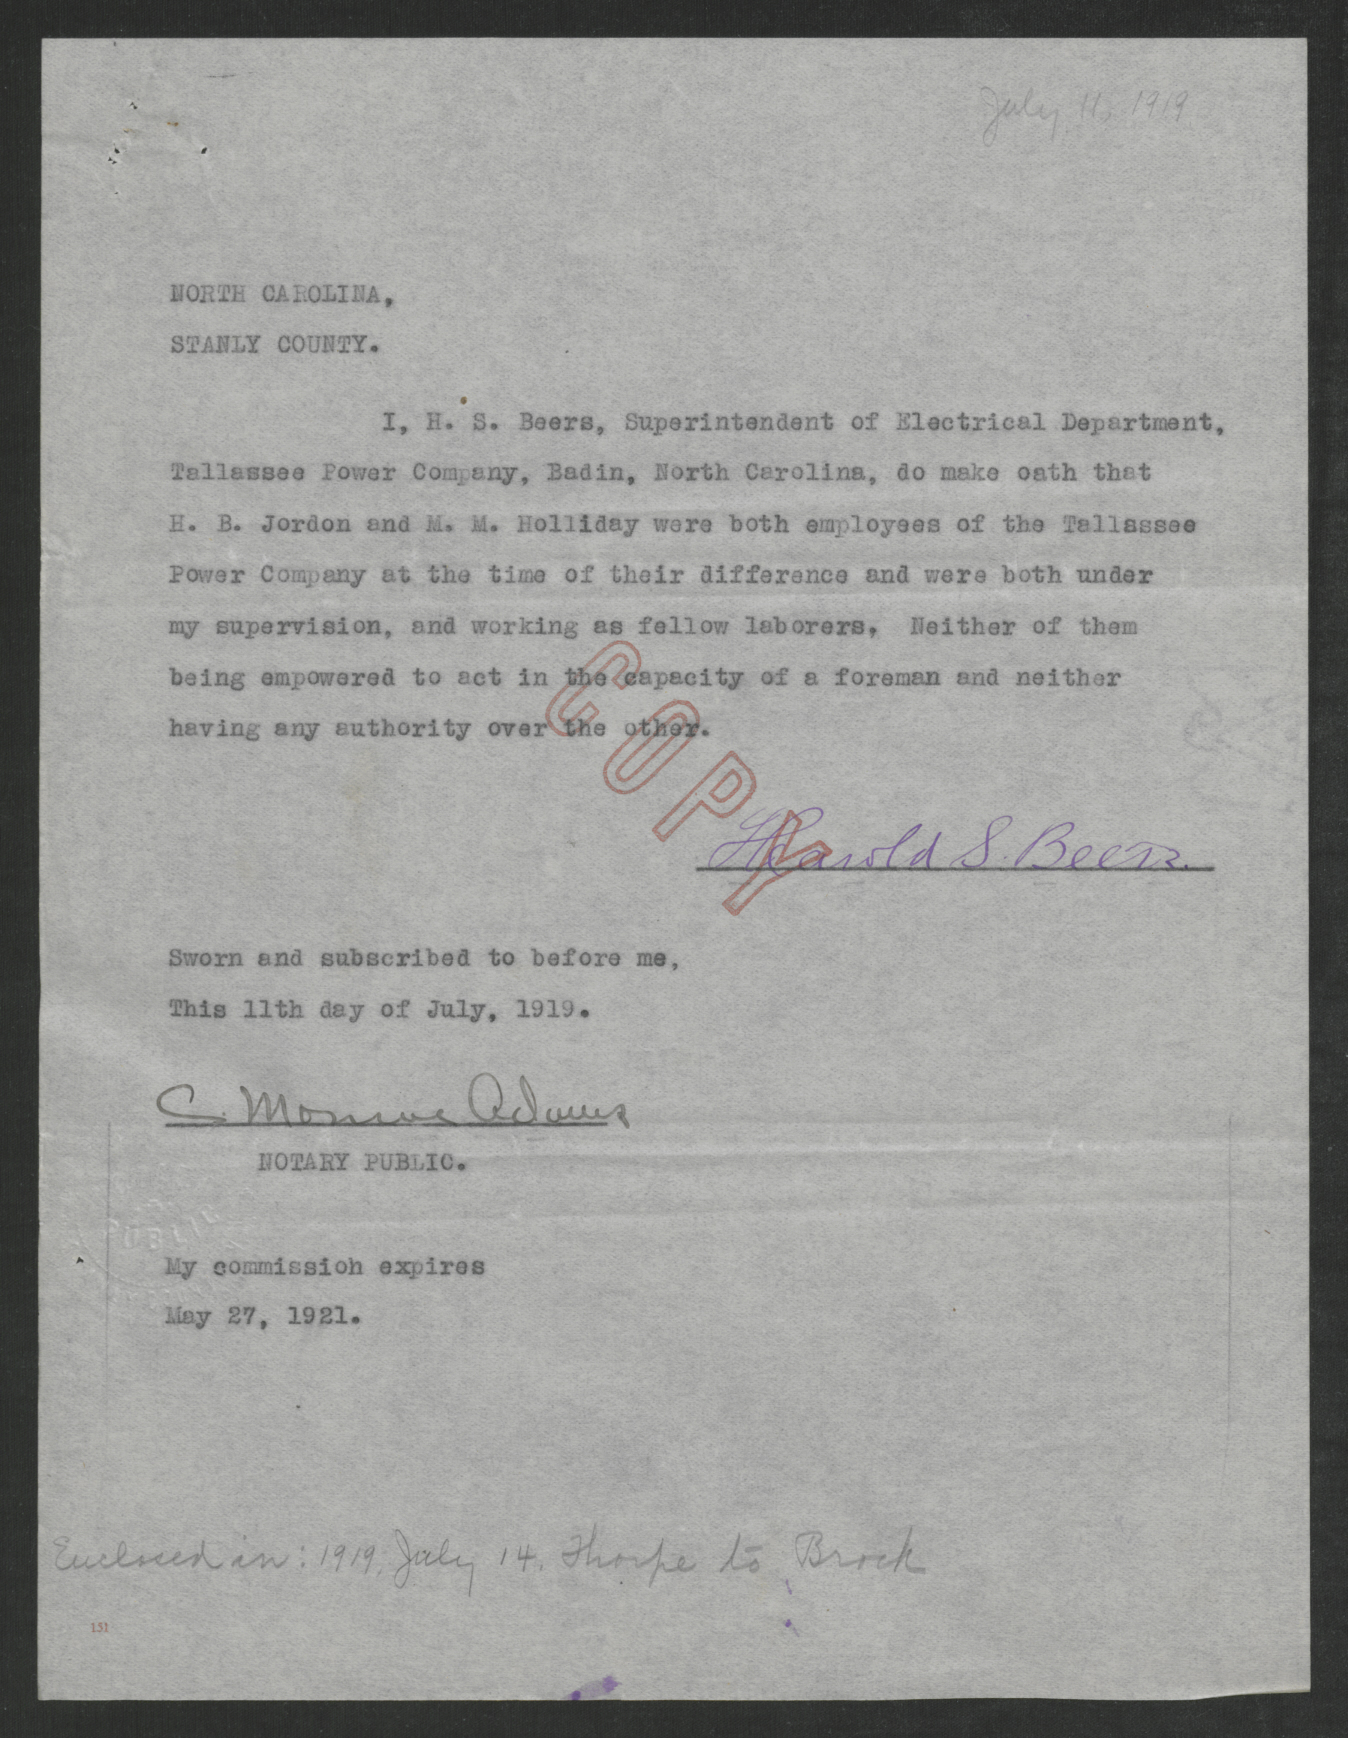 Affidavit of Harold S. Beers, July 11, 1919